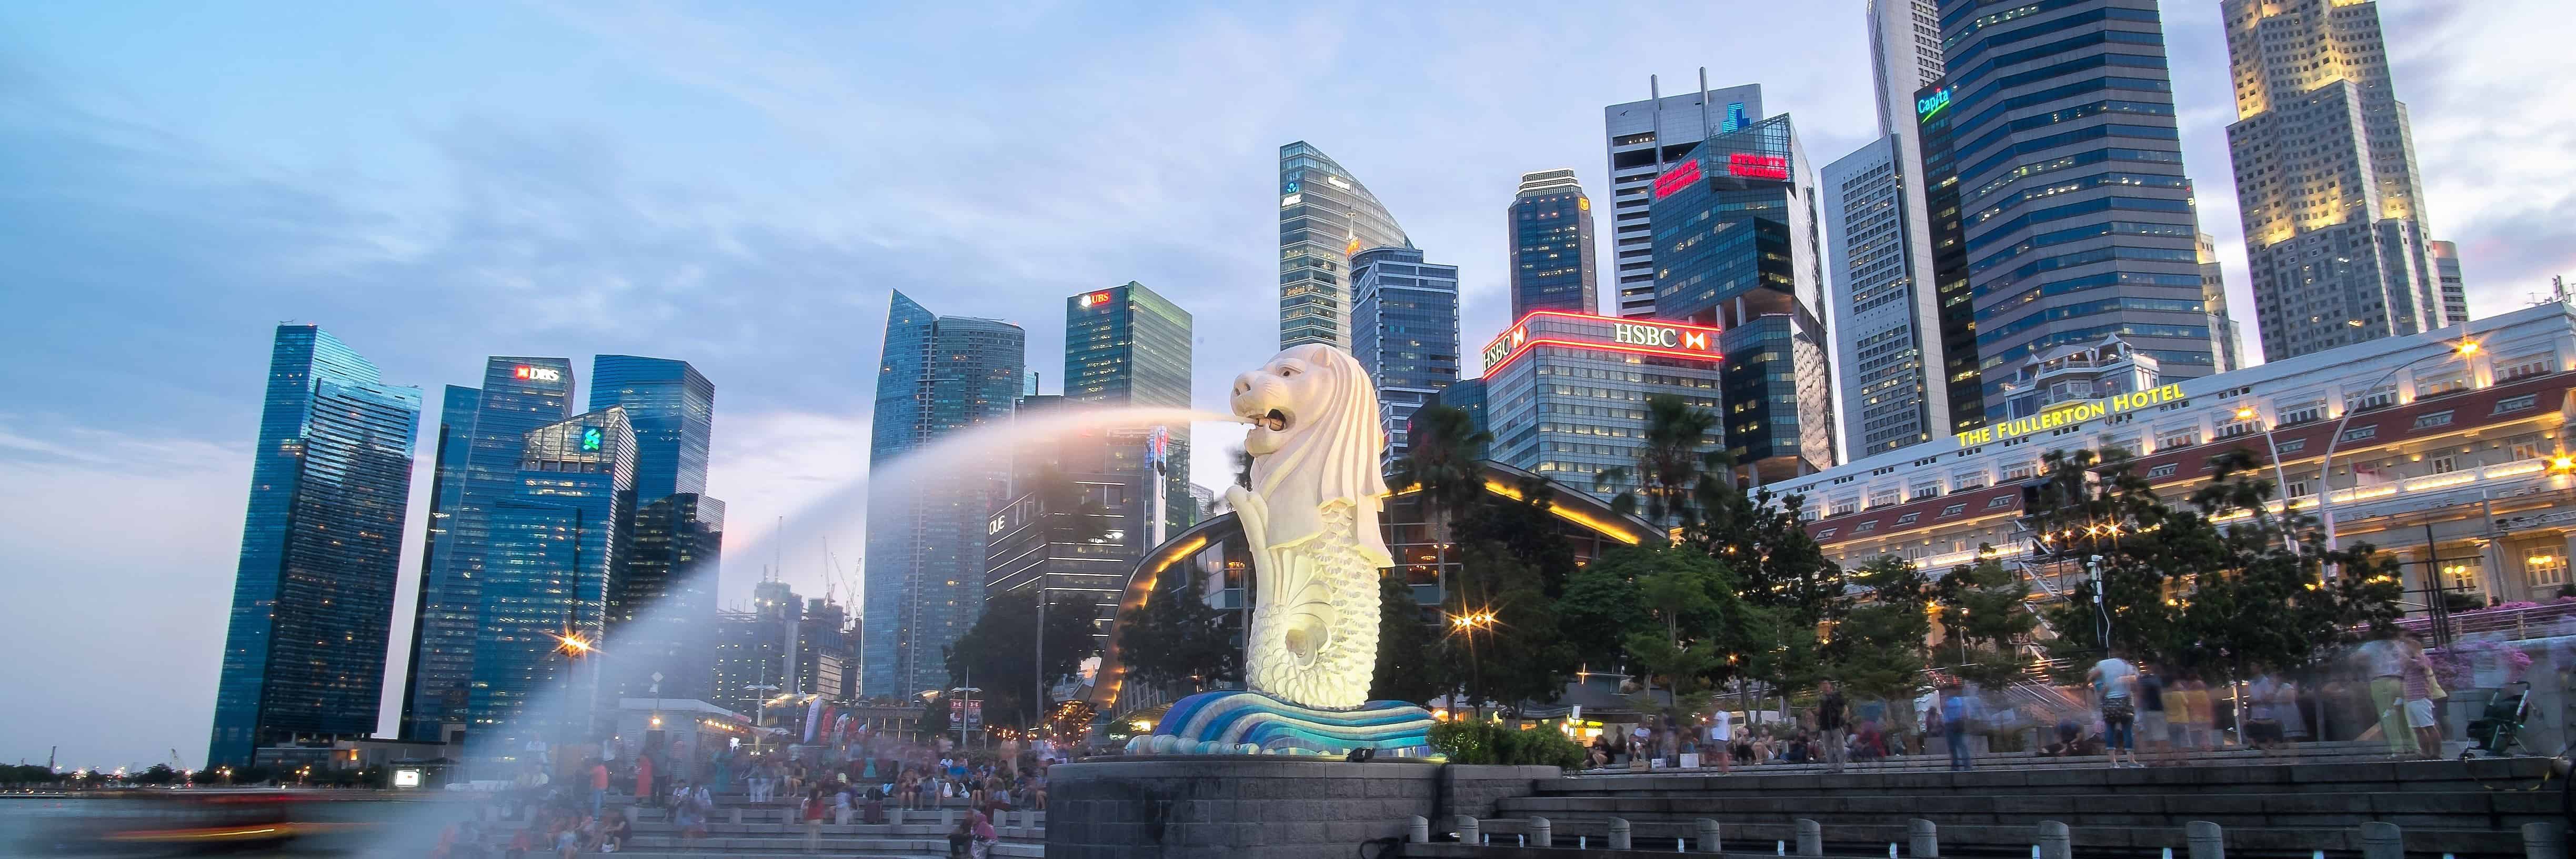 Buy Singapore travel sim at Sim2go Vietnam at good price